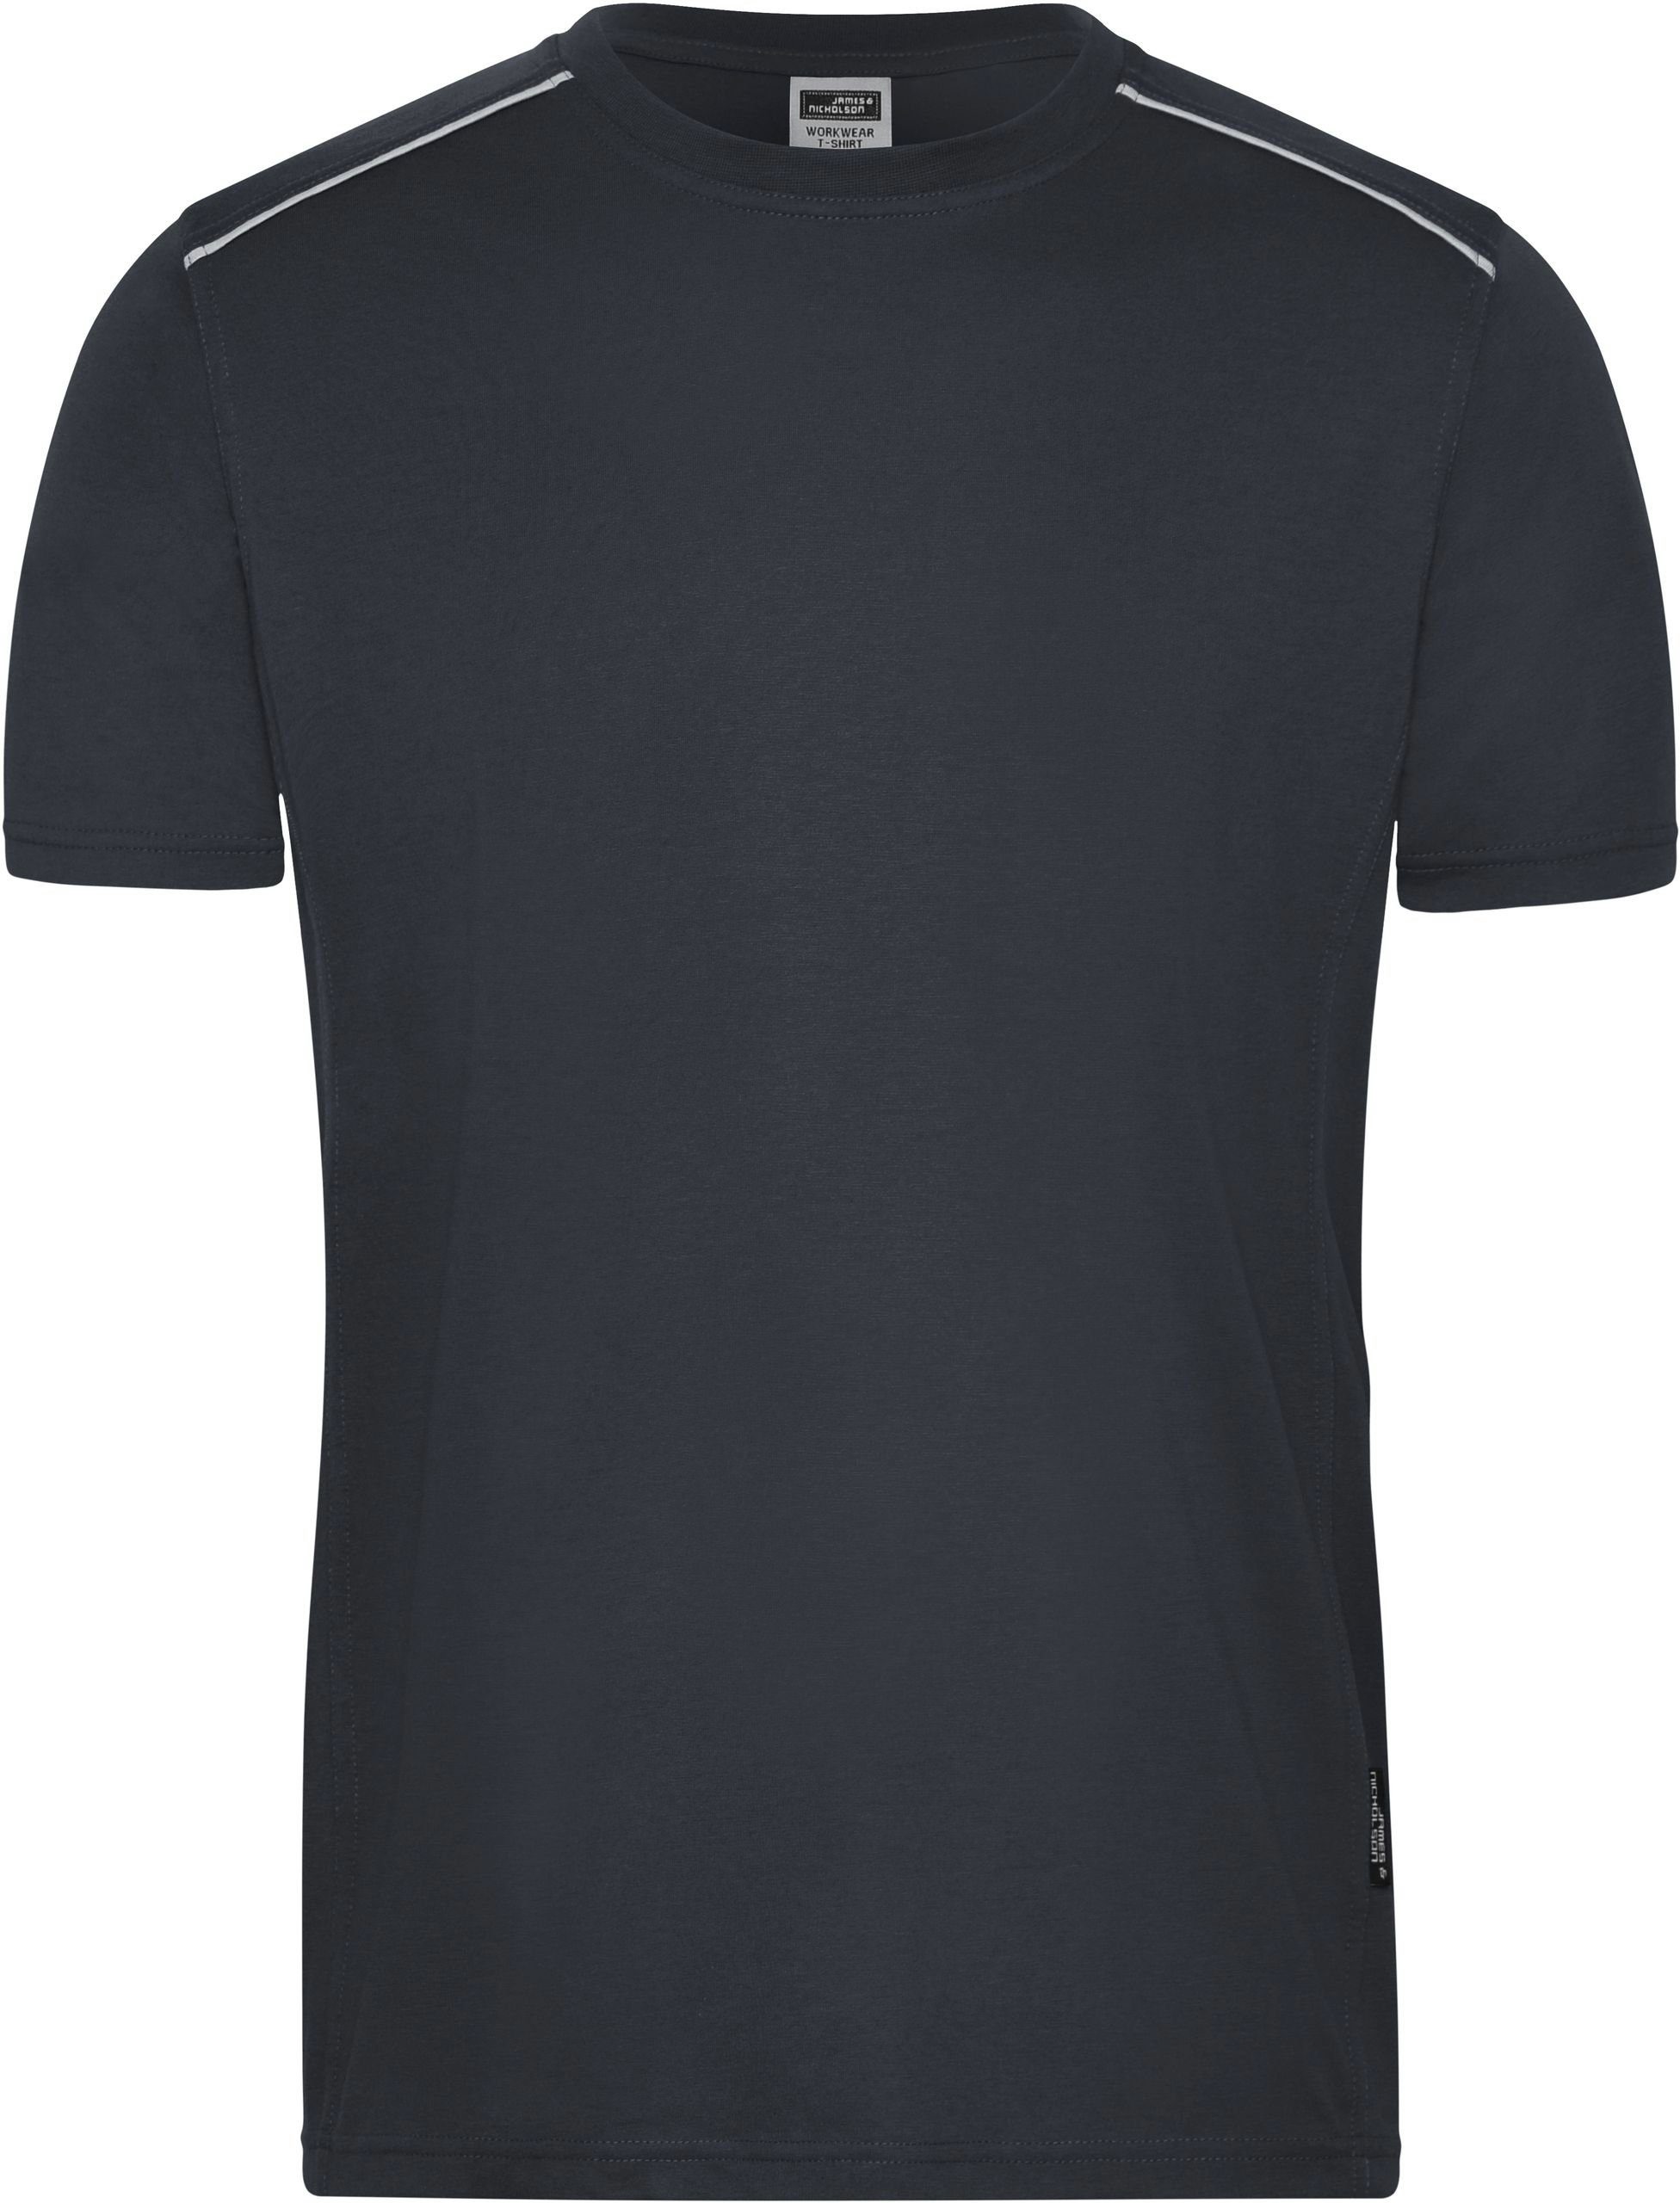 T-Shirt Workwear James Bio & -Solid- Nicholson Baumwolle Carbon FaS50890 Arbeits T-Shirt